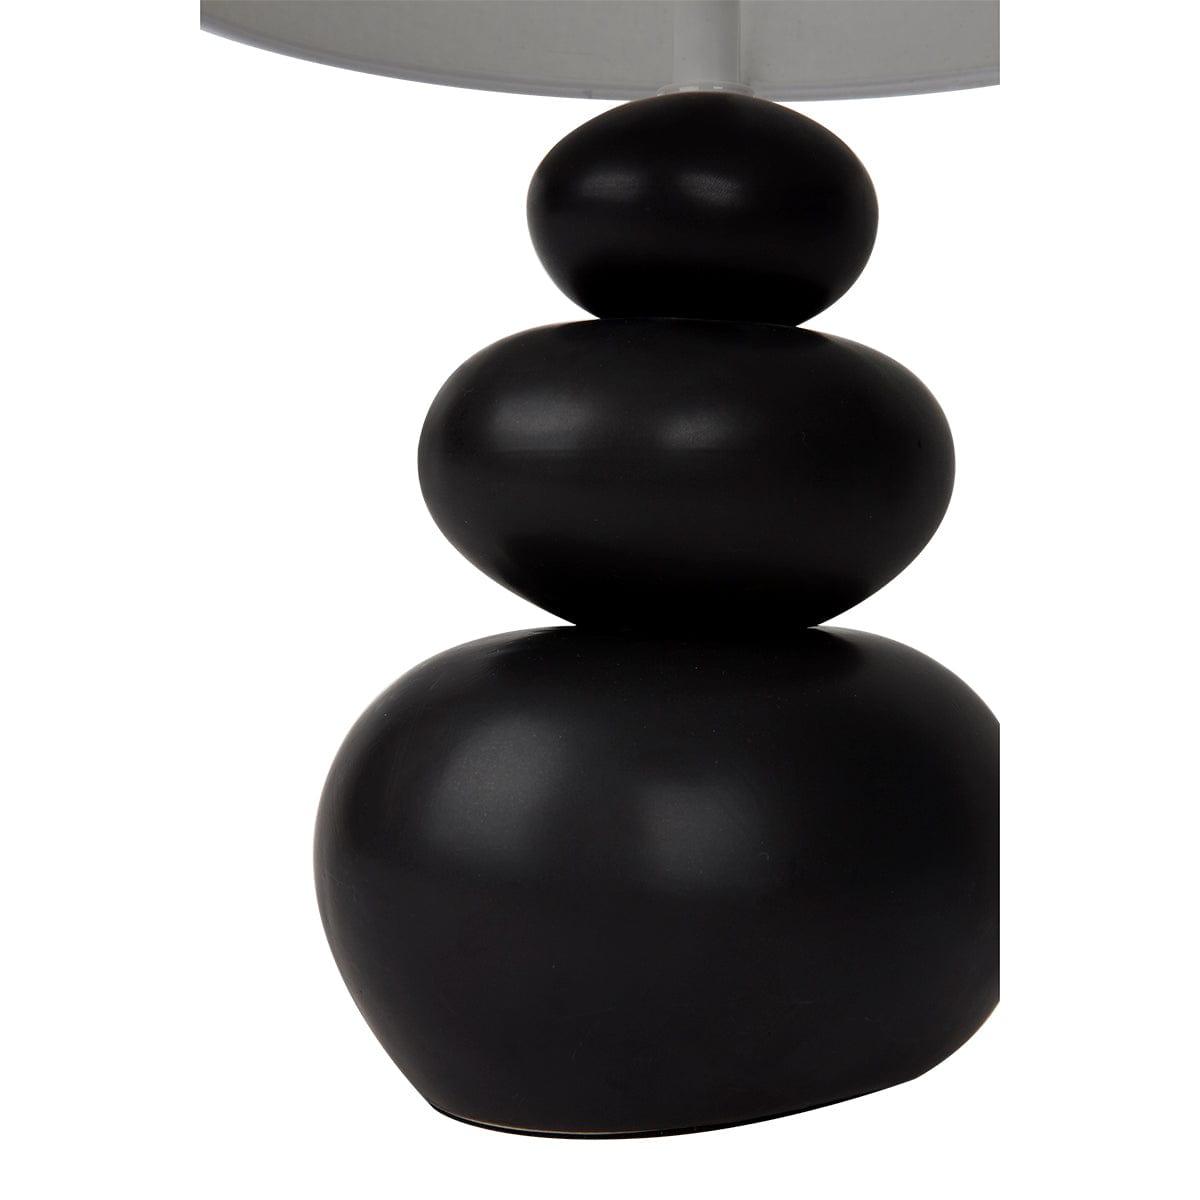 House Journey Table Lamp Koa Table Lamp - Black Matte Ceramic